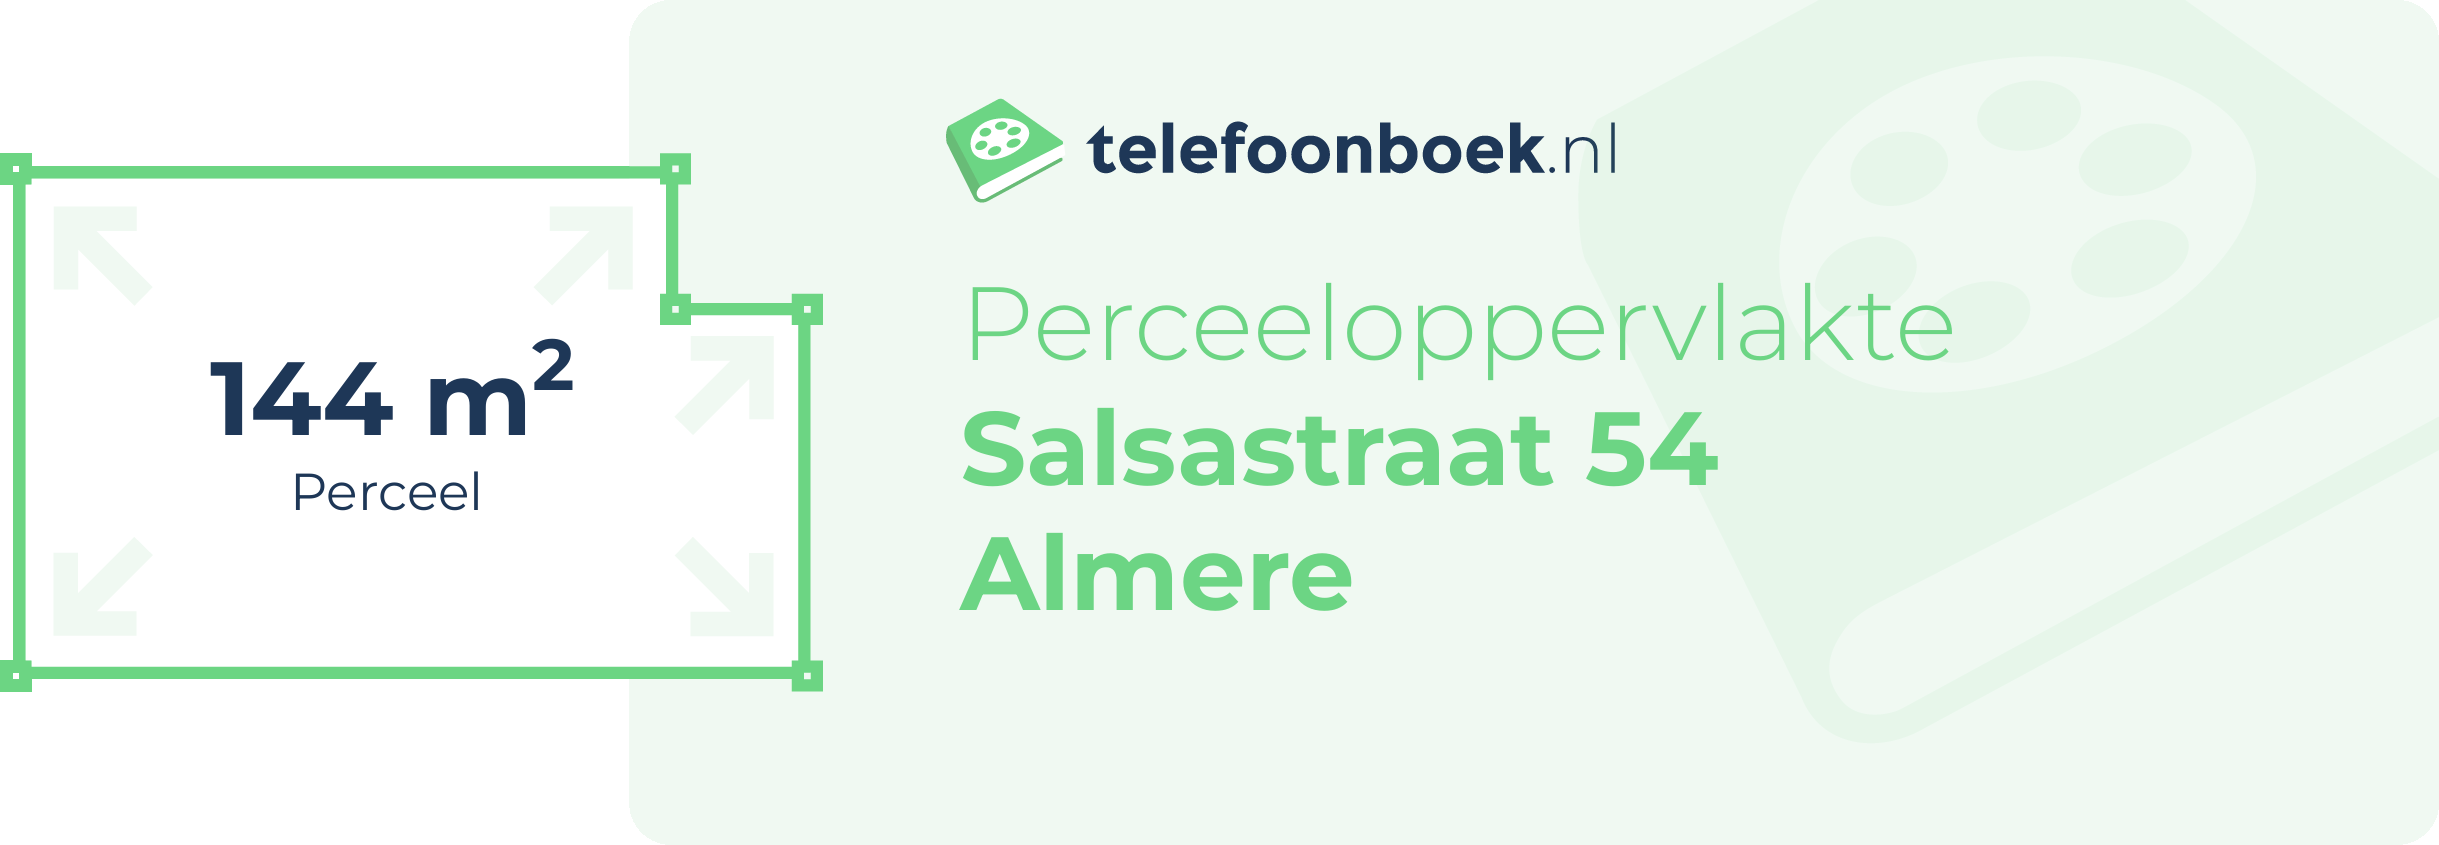 Perceeloppervlakte Salsastraat 54 Almere